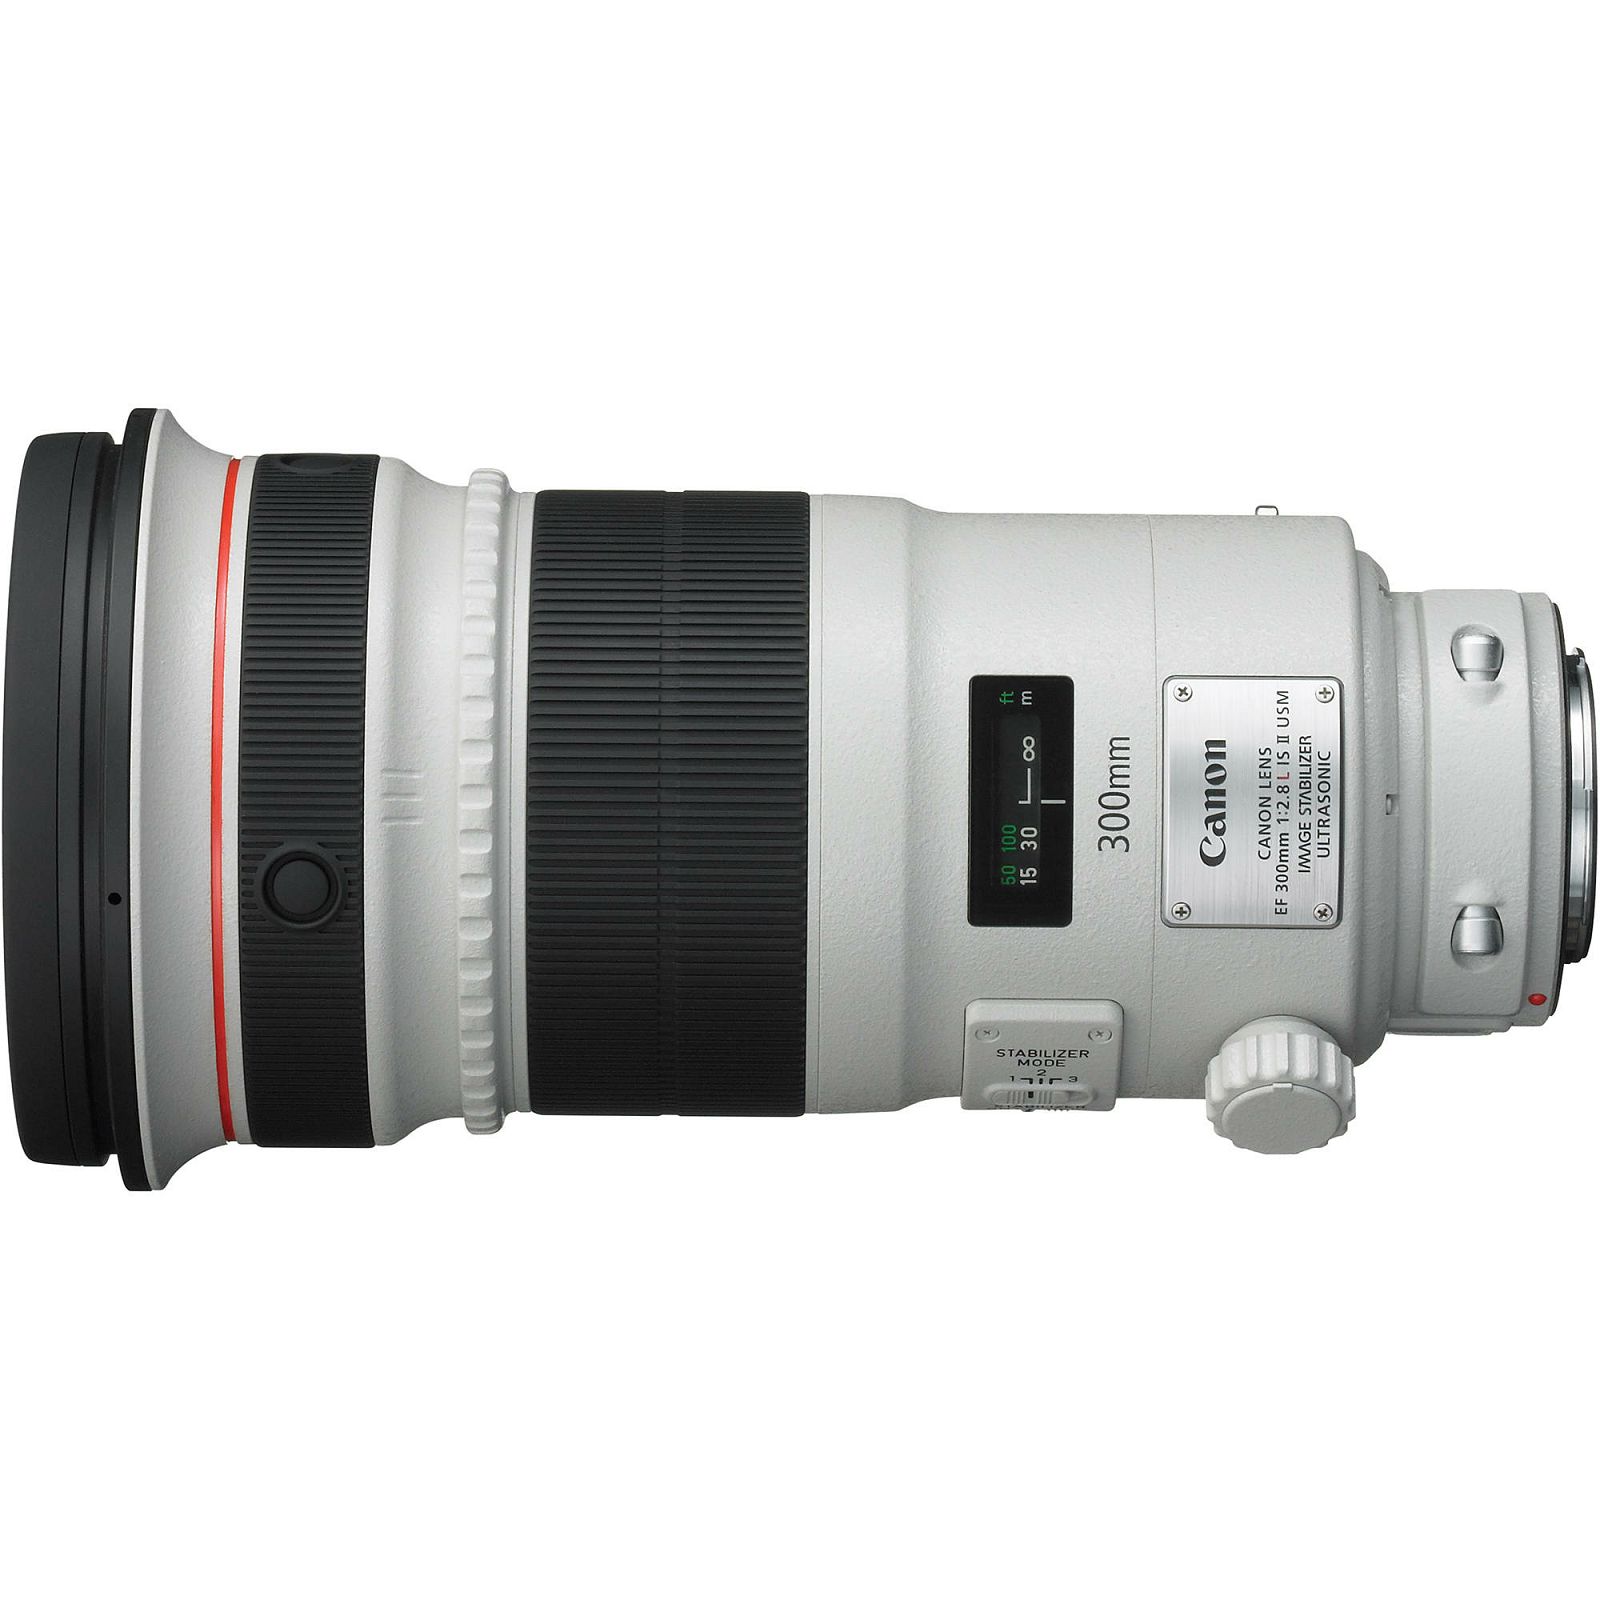 Canon EF 300mm f/2.8 L IS II USM profesionalni telefoto objektiv za sportsku fotografiju 300 1:2,8 (4411B005AA)